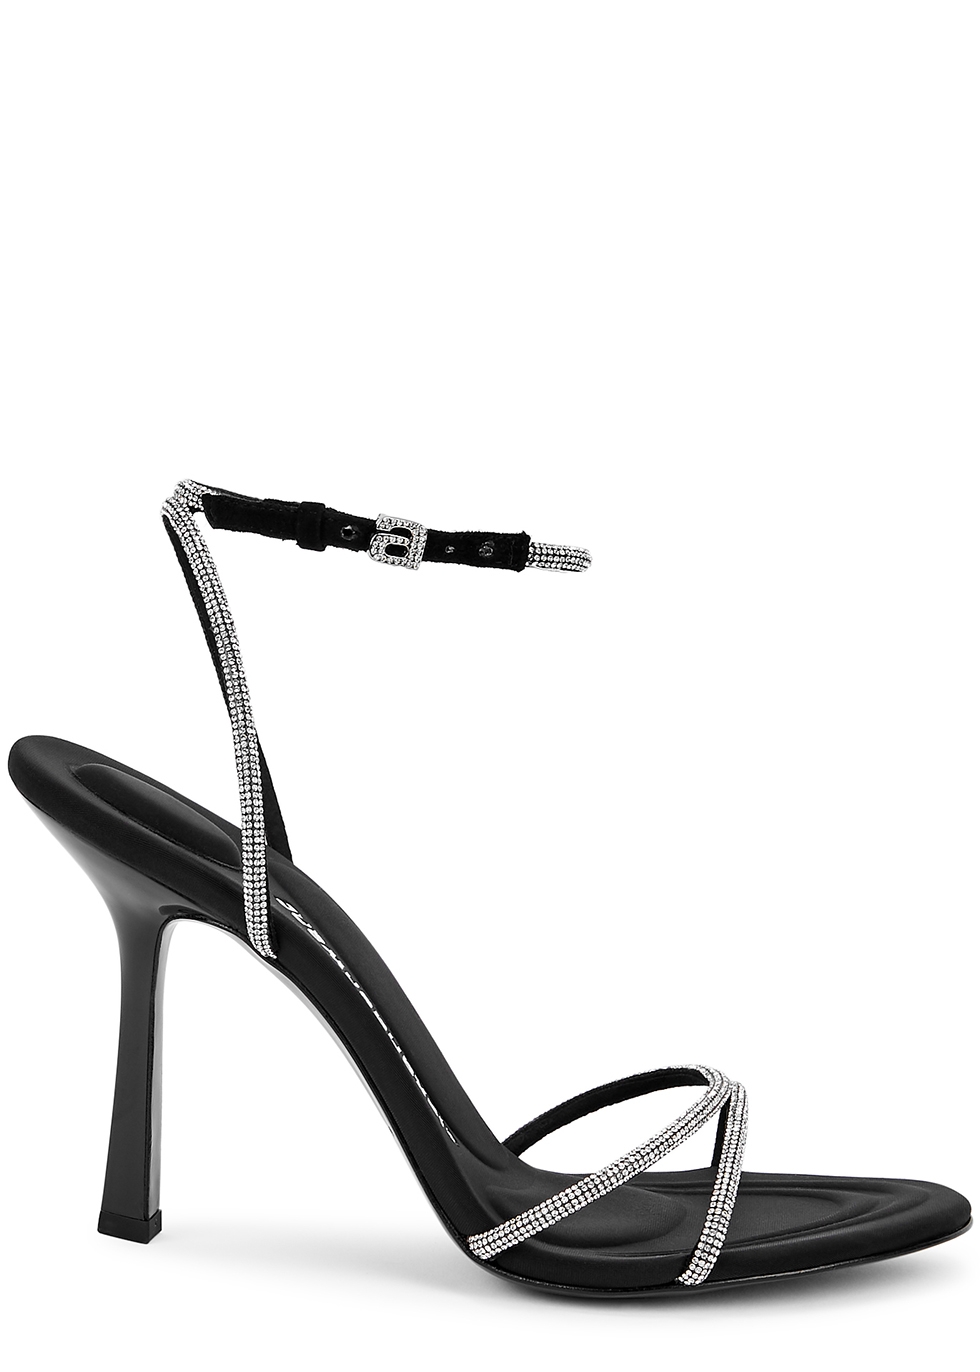 Alexander Wang Dahlia 105 black embellished sandals - Harvey Nichols